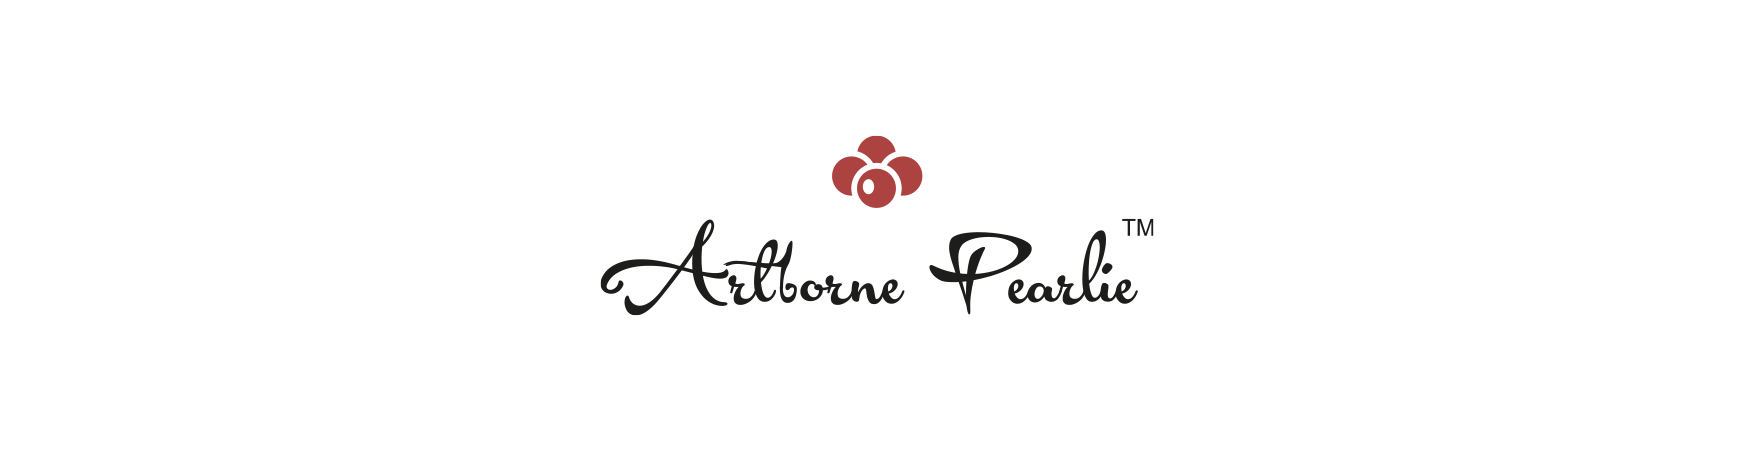 Arthborne Pearlie